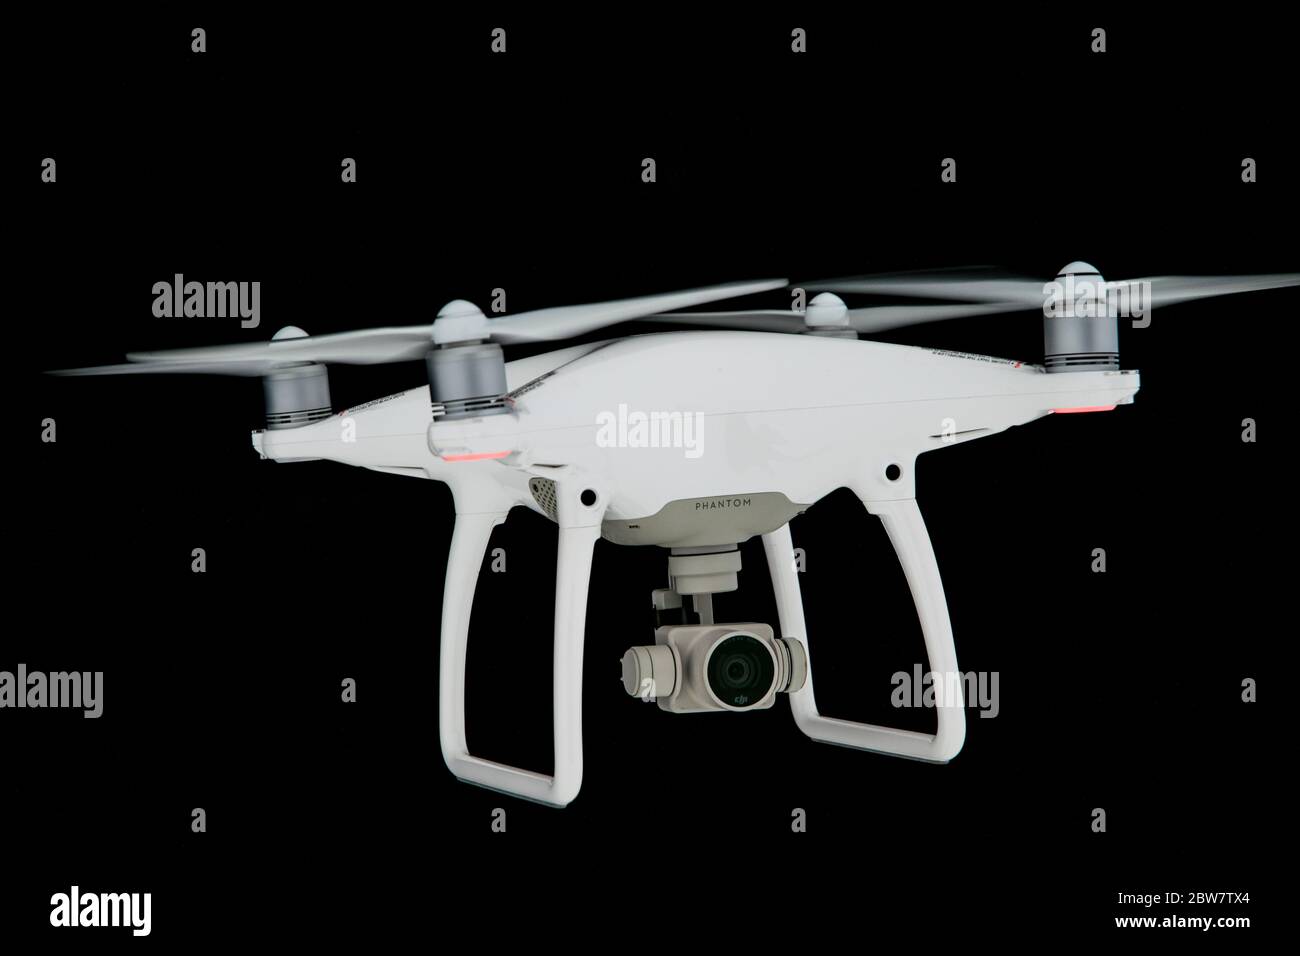 Drohne DJI Phantom 4 mit integrier, Gimbal-gelagerter Kamera fliegt Nachts in der Luft - Flugdrohne Foto de stock